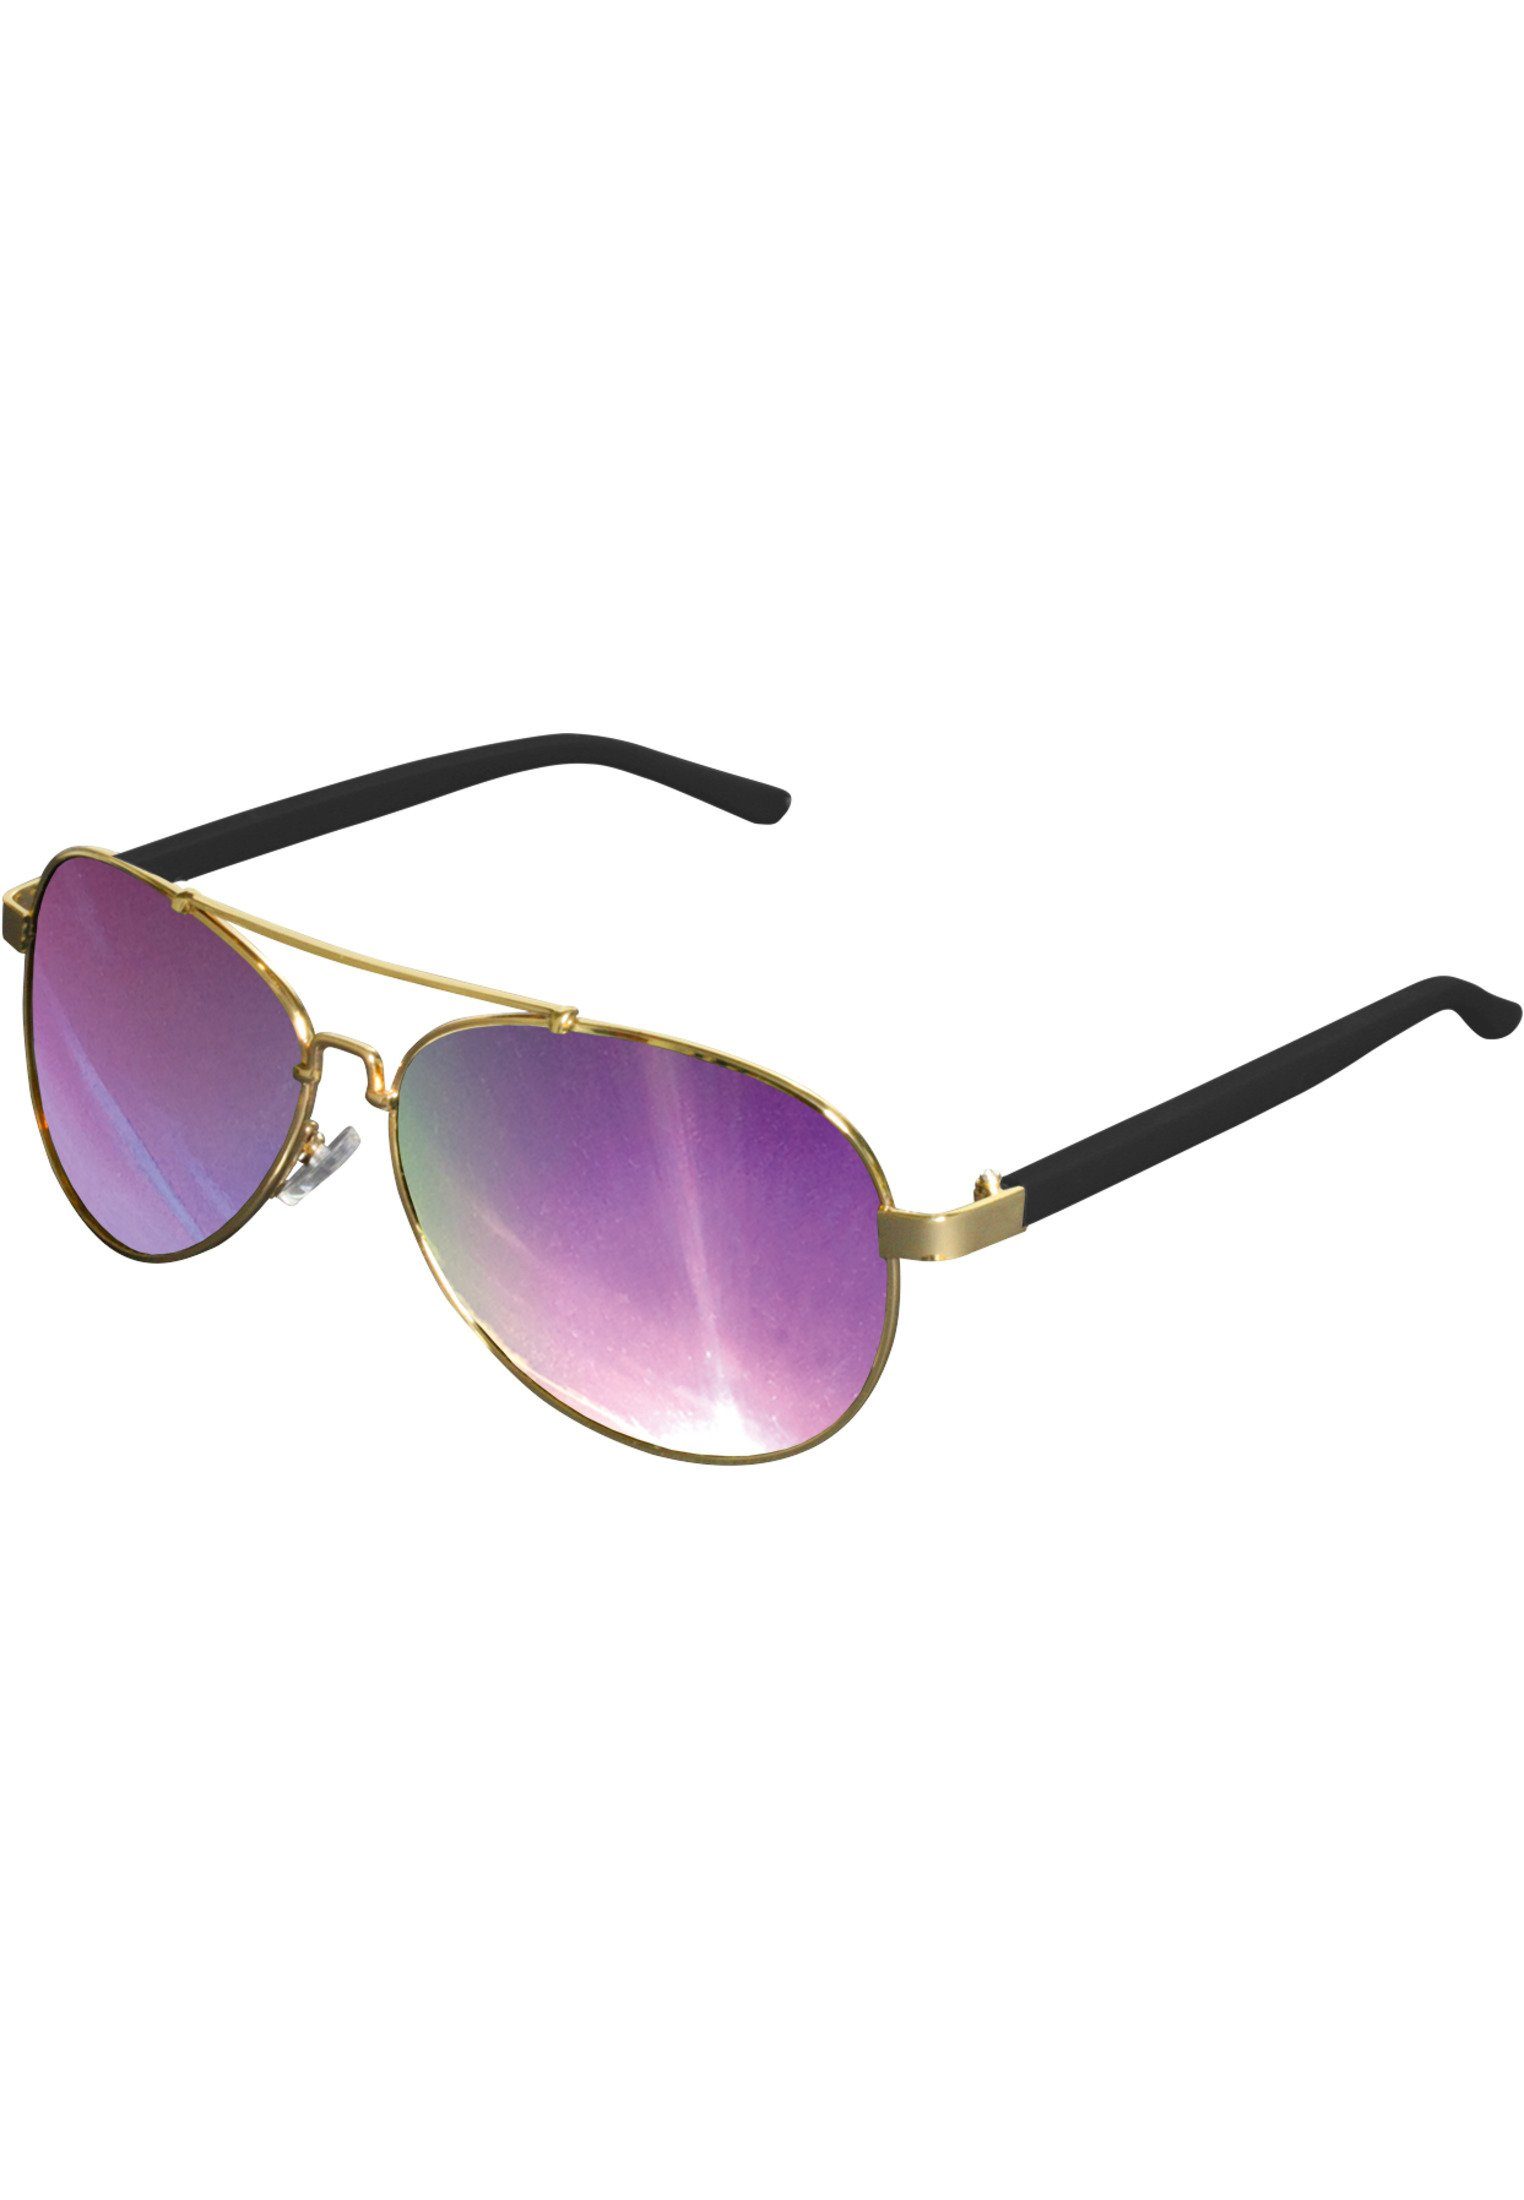 Sonnenbrille MSTRDS gold/purple Mirror Mumbo Accessoires Sunglasses